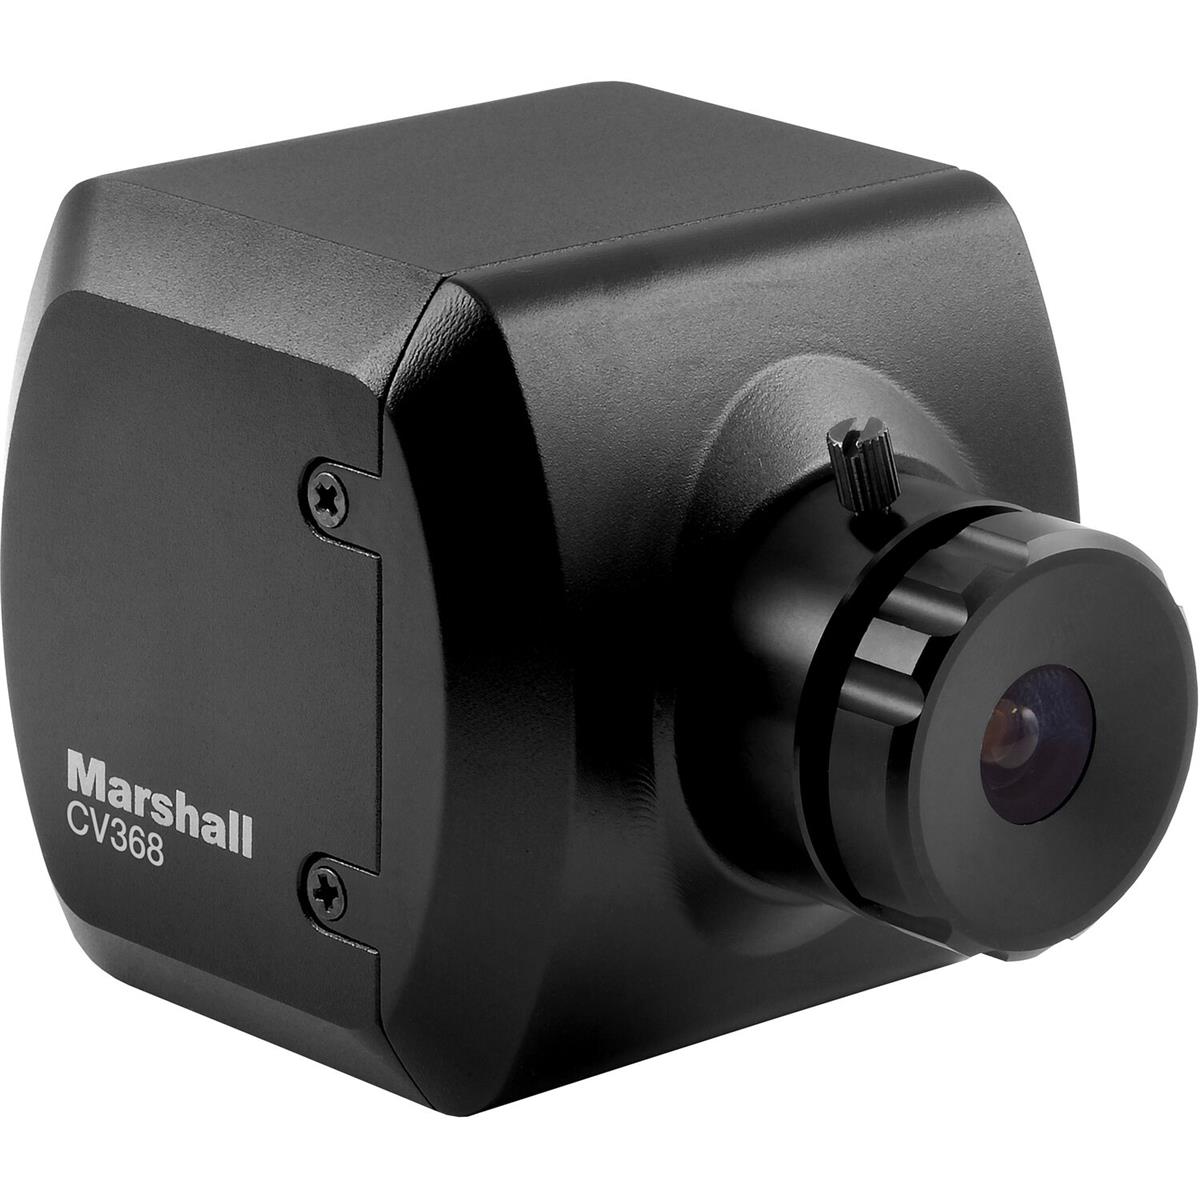 Image of Marshall Electronics CV368 3.2MP Full HD 3G-SDI/HDMI Compact Genlock Camera